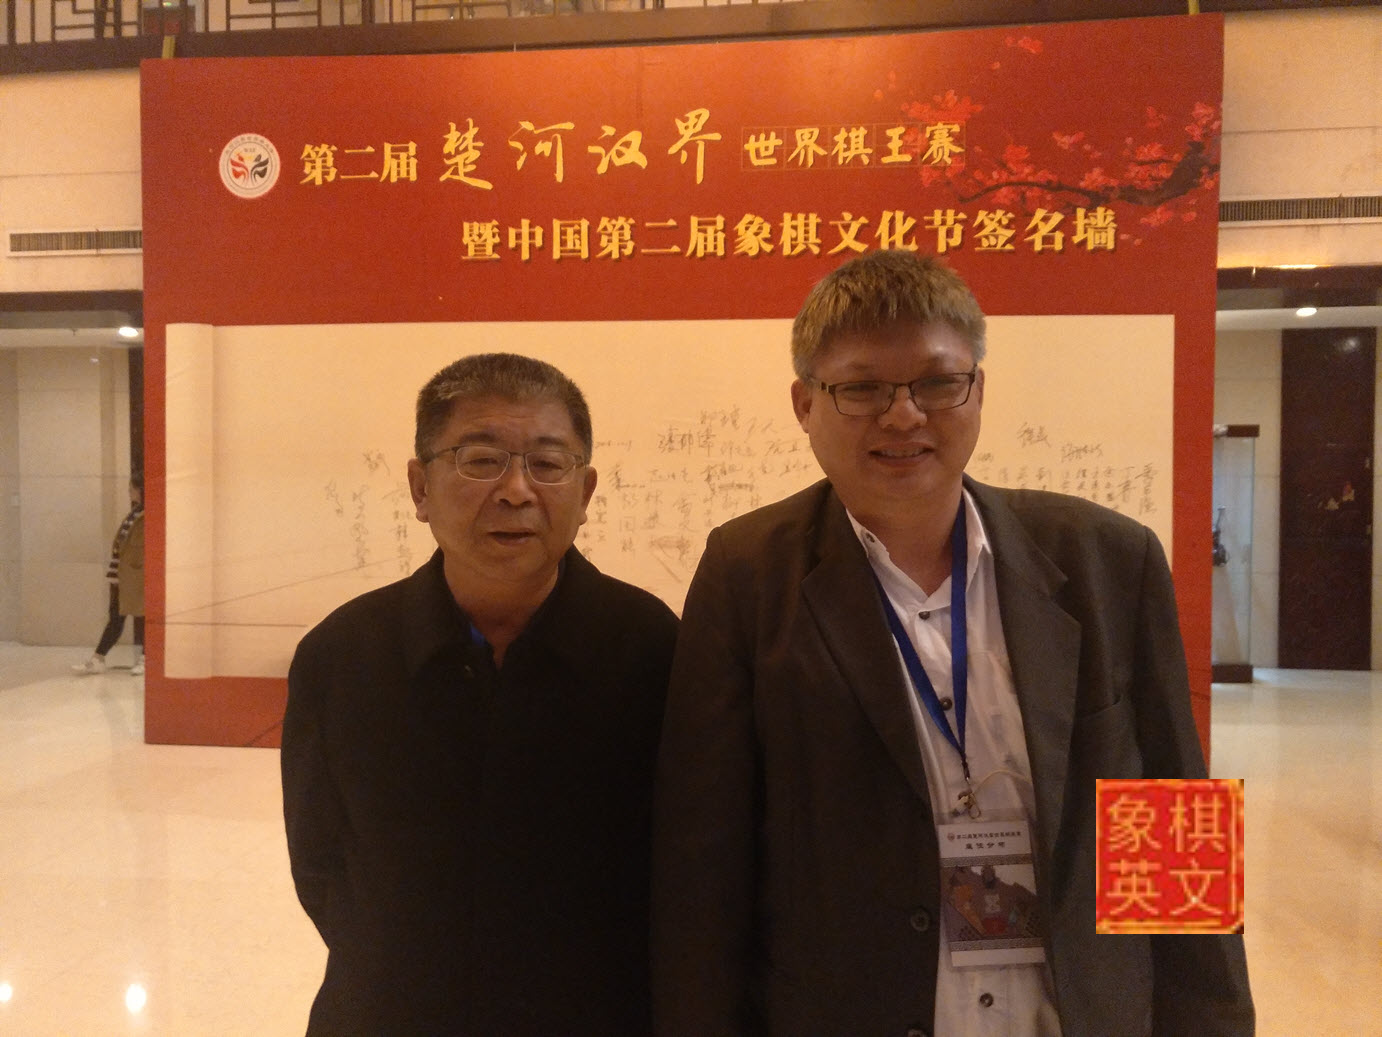 GM Li Laiqun and Webmaster